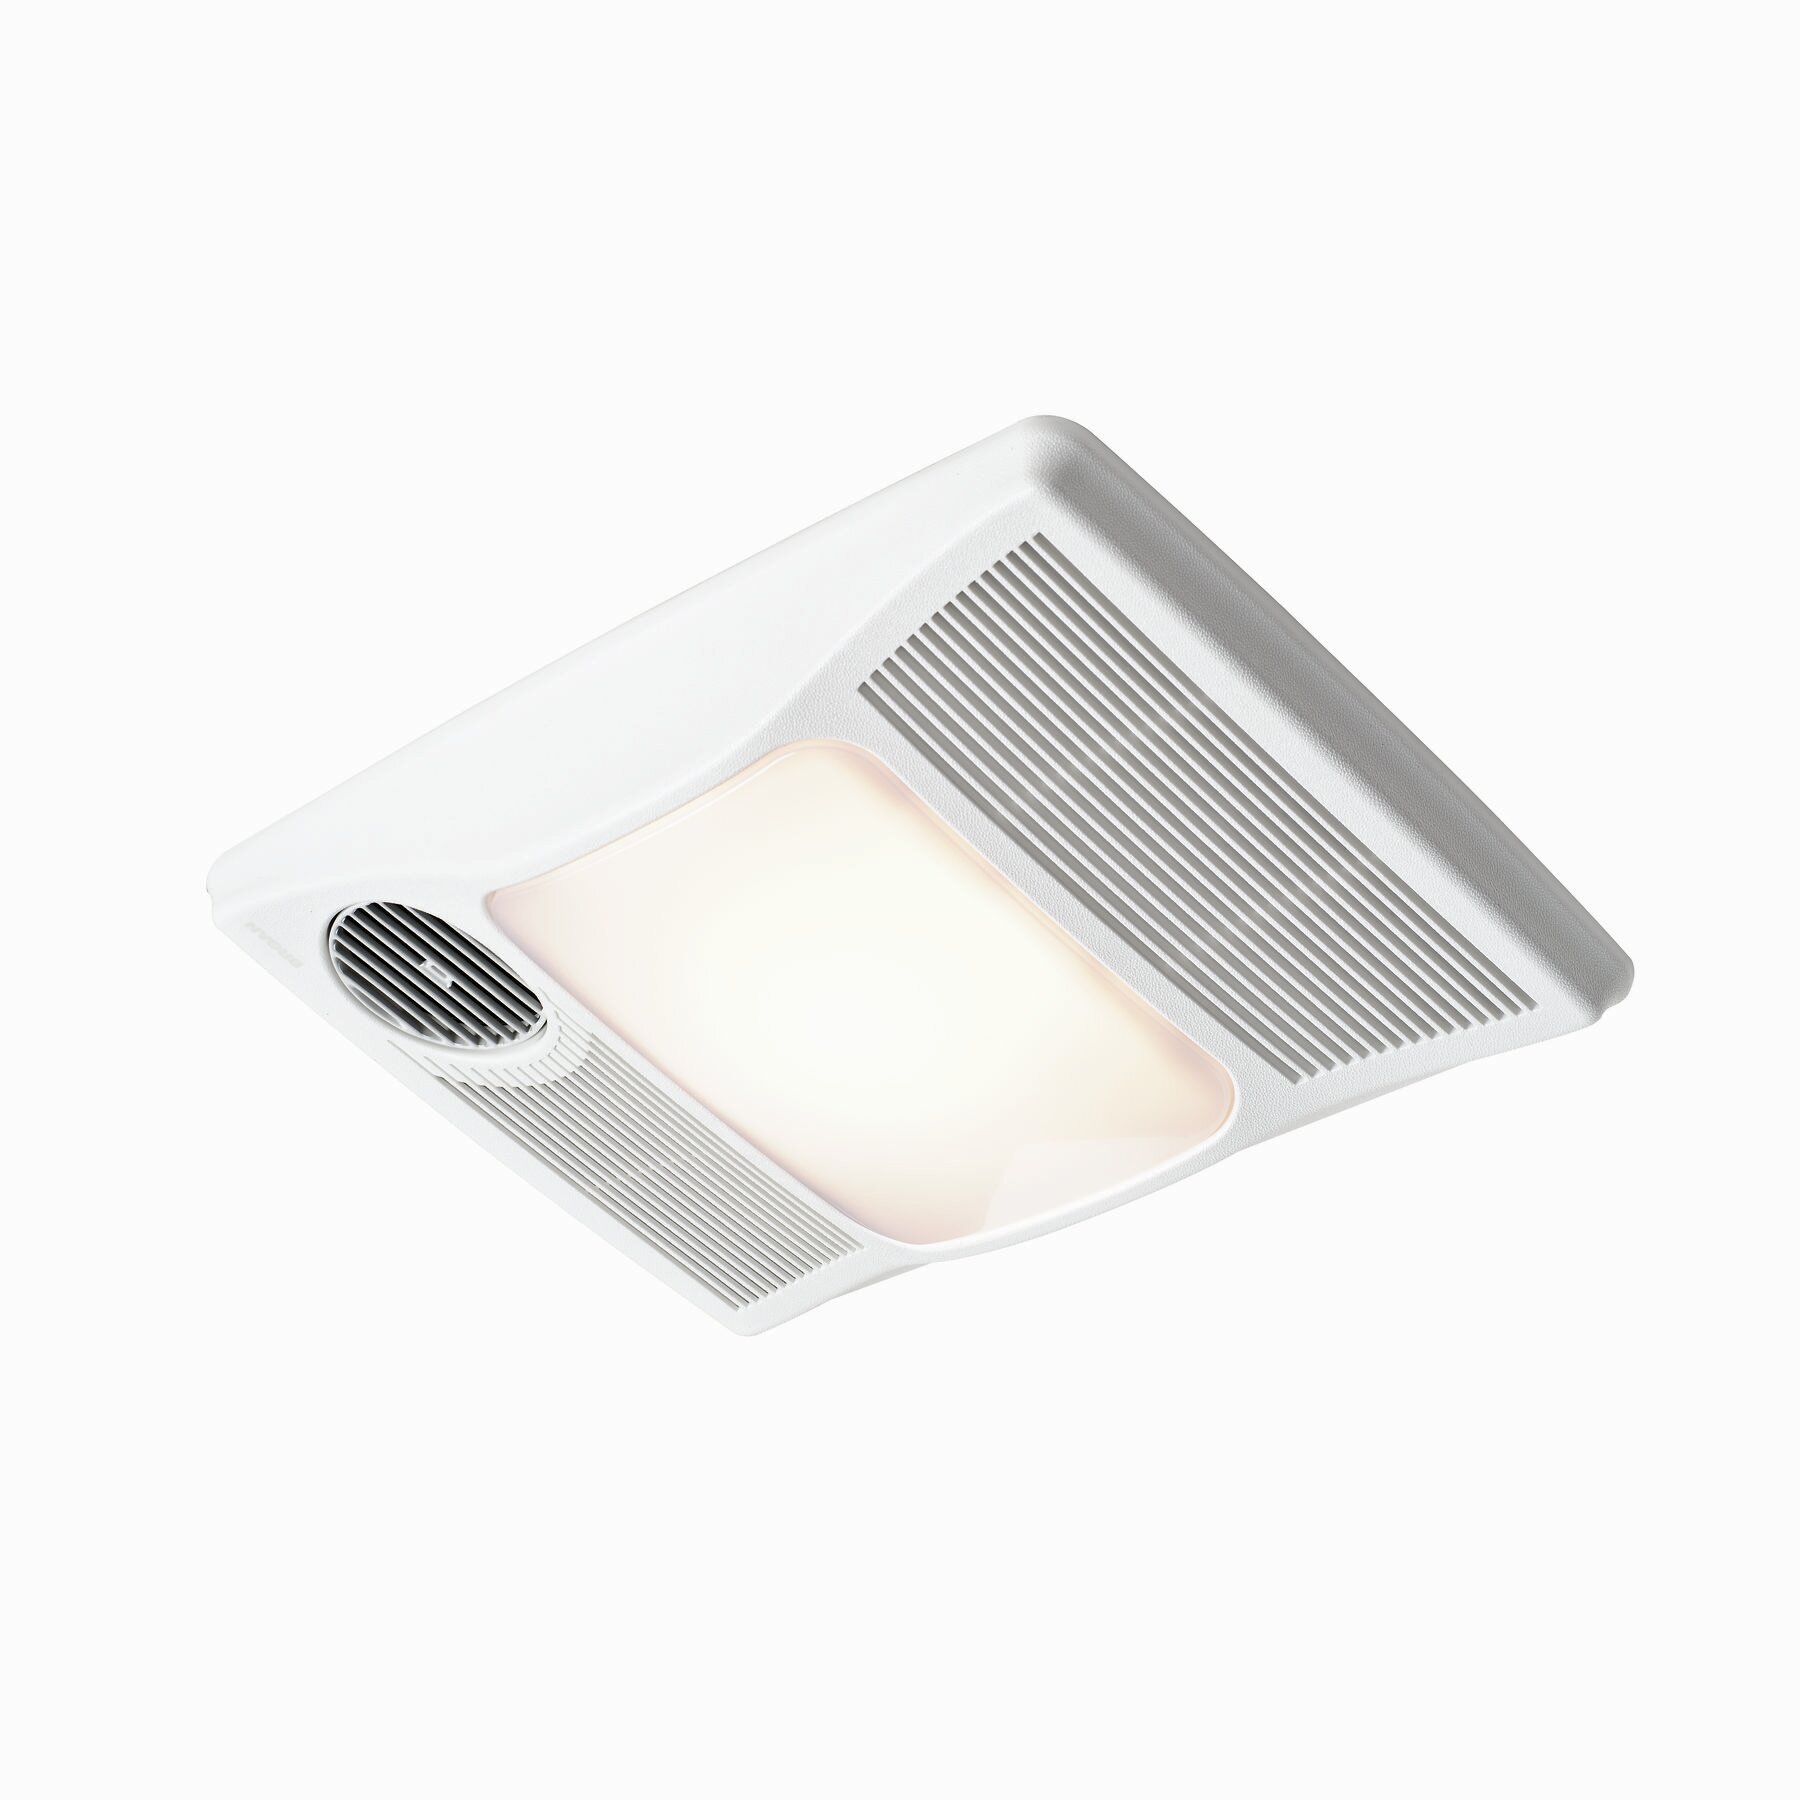 Broan 100 Cfm Bathroom Fan With Heater And Light Reviews Wayfair